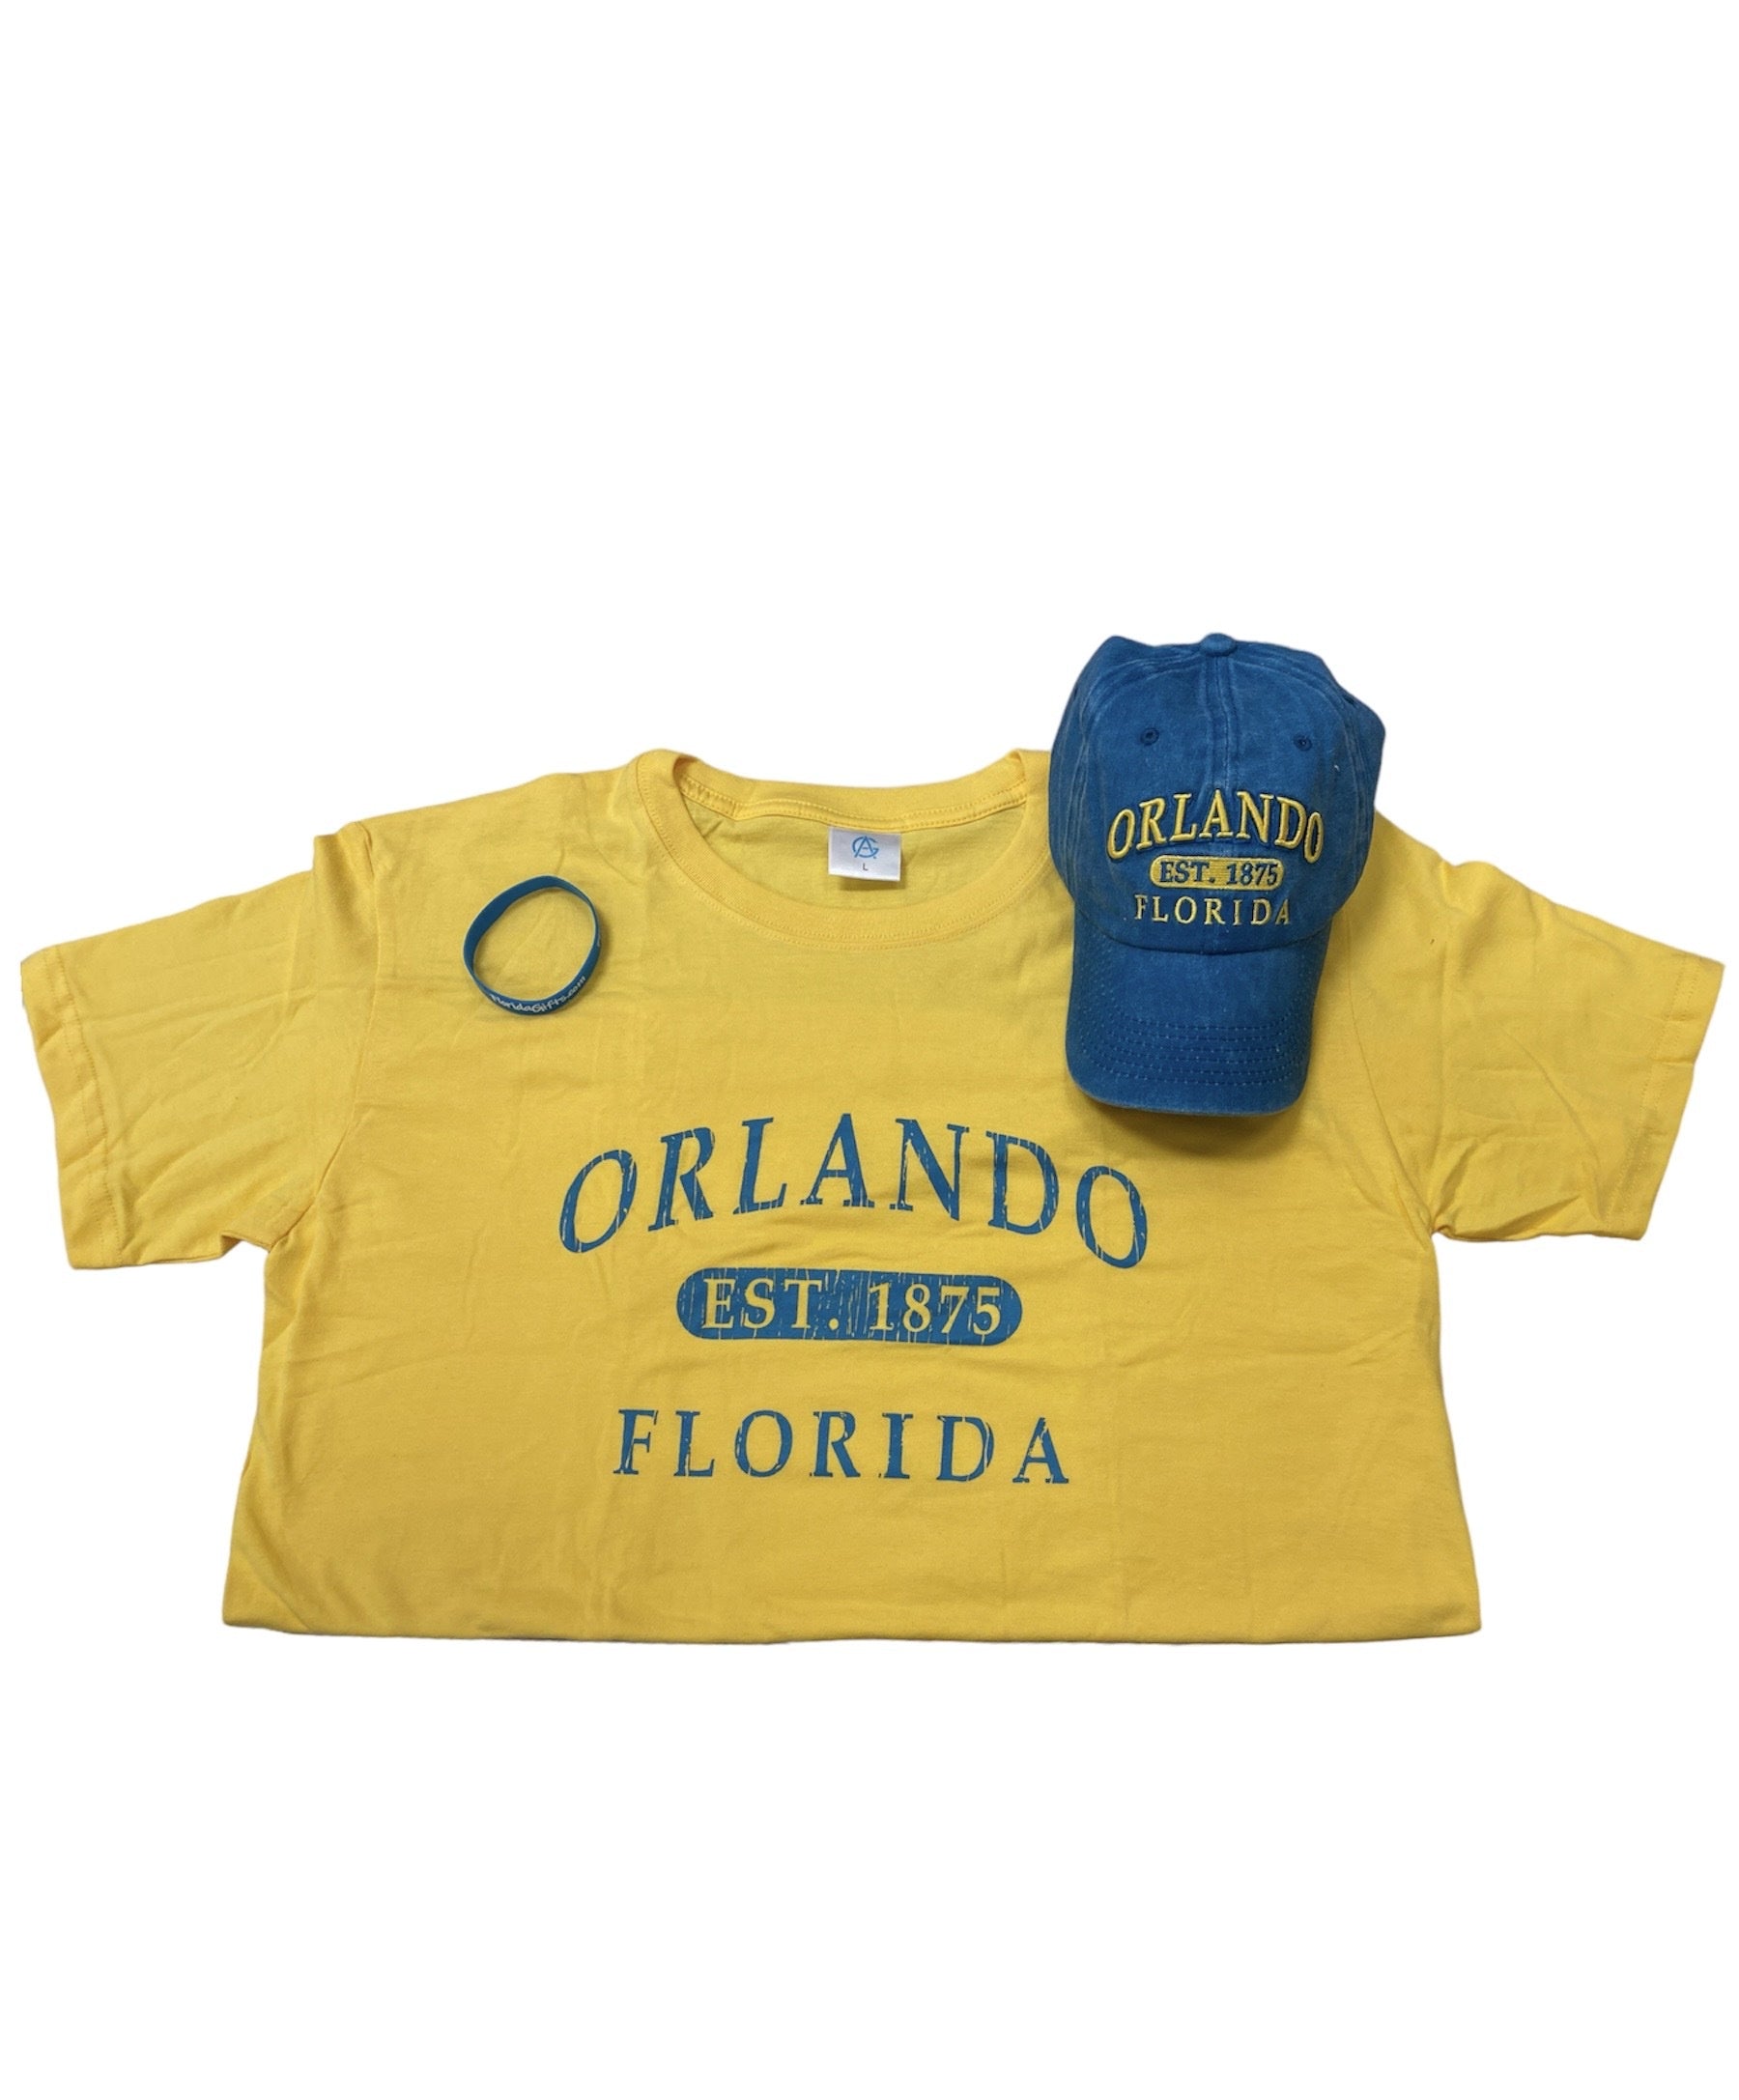 Orlando Florida Yellow Shirt With Blue Cap Set